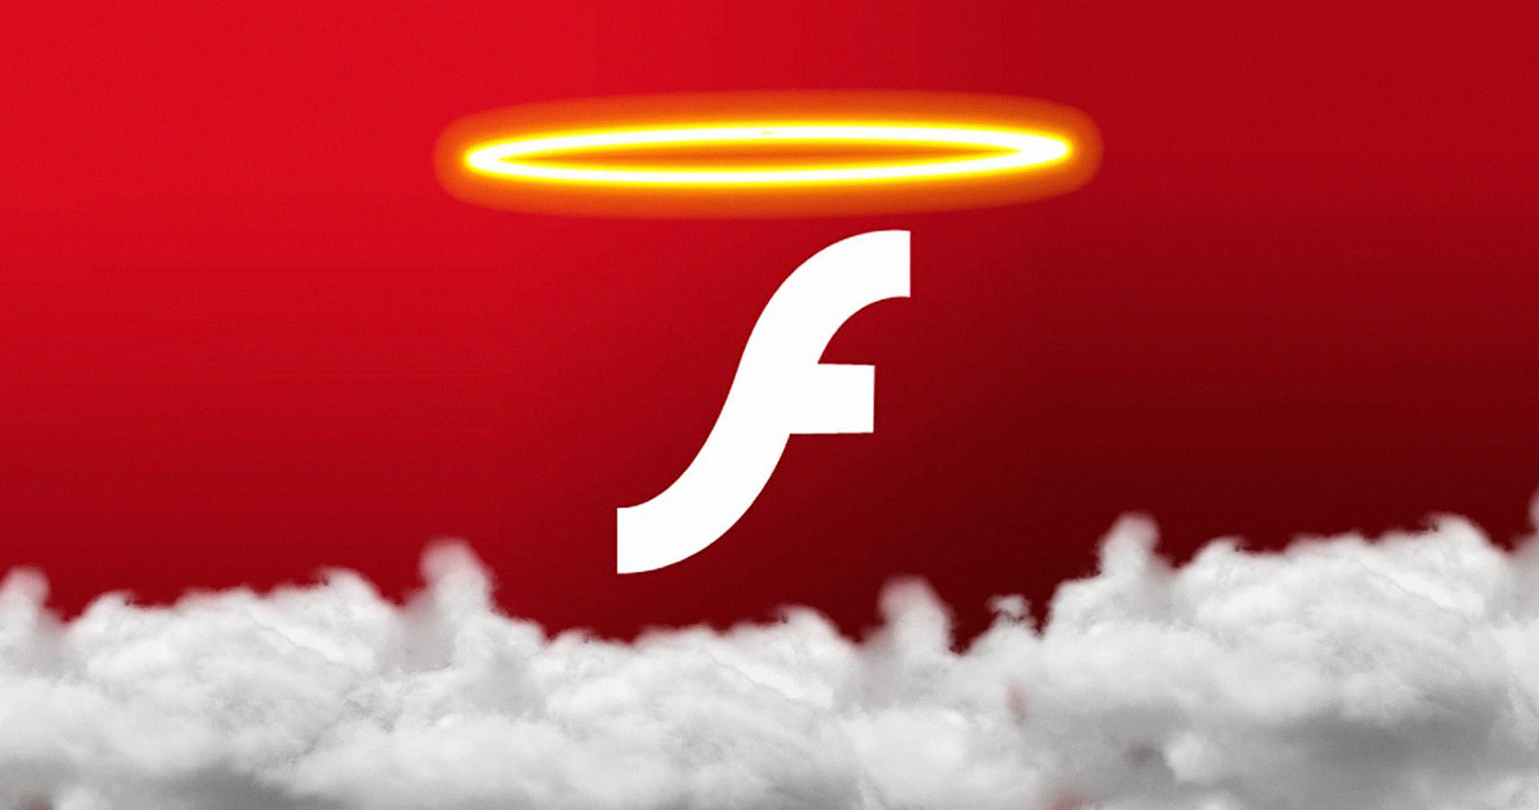 Adobe Flash Player- Flash Player ကို အစားထိုးရန် ထိပ်တန်း အကောင်းဆုံး ရွေးချယ်စရာ ၁၀ ခု